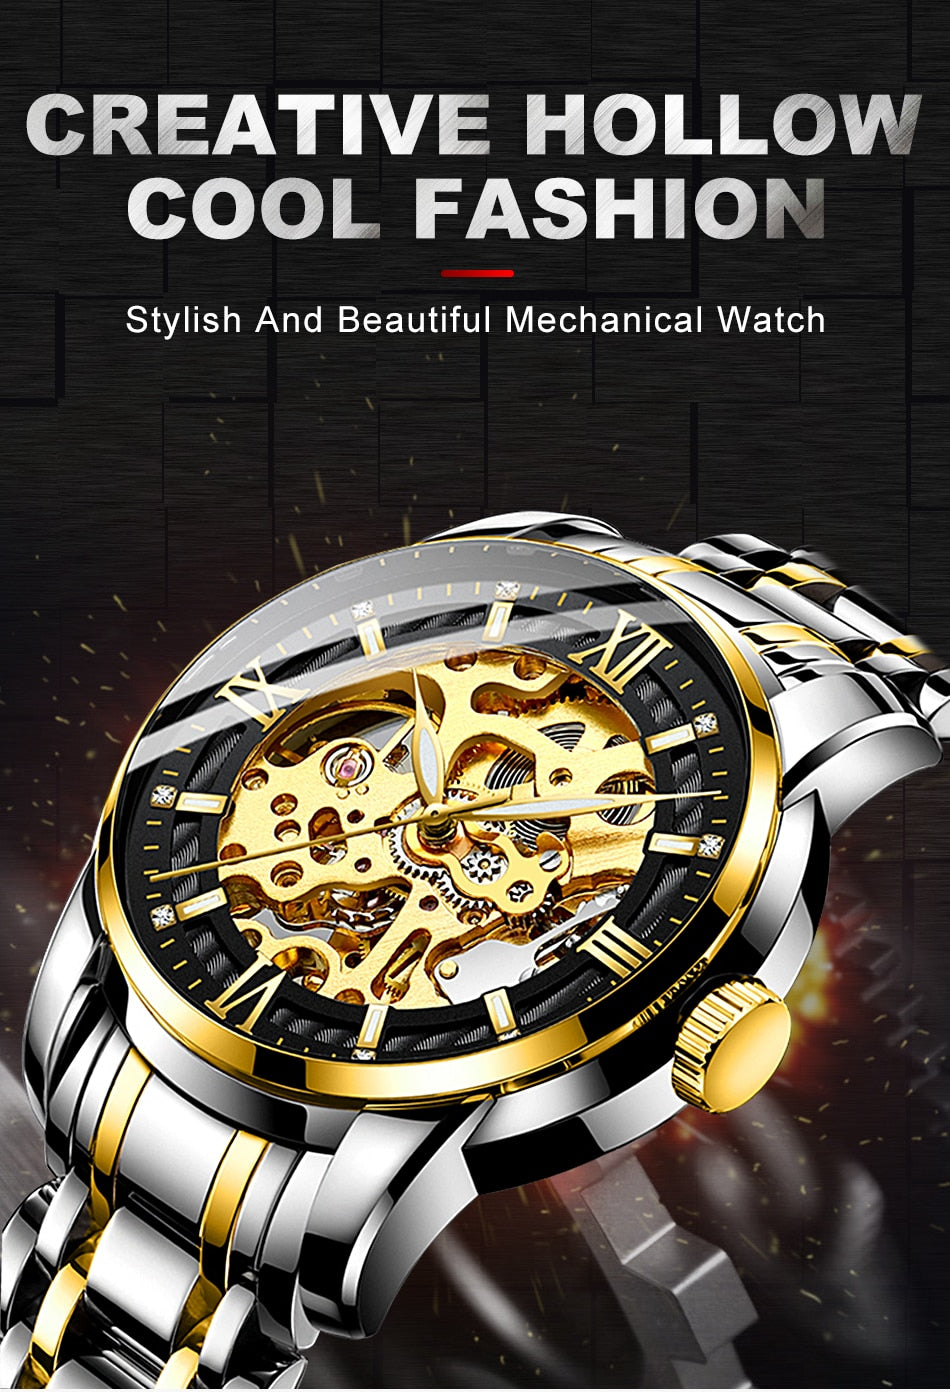 Original BIDEN Mechanical Automatic Self-Wind Wristwatche Watch - Biden 46